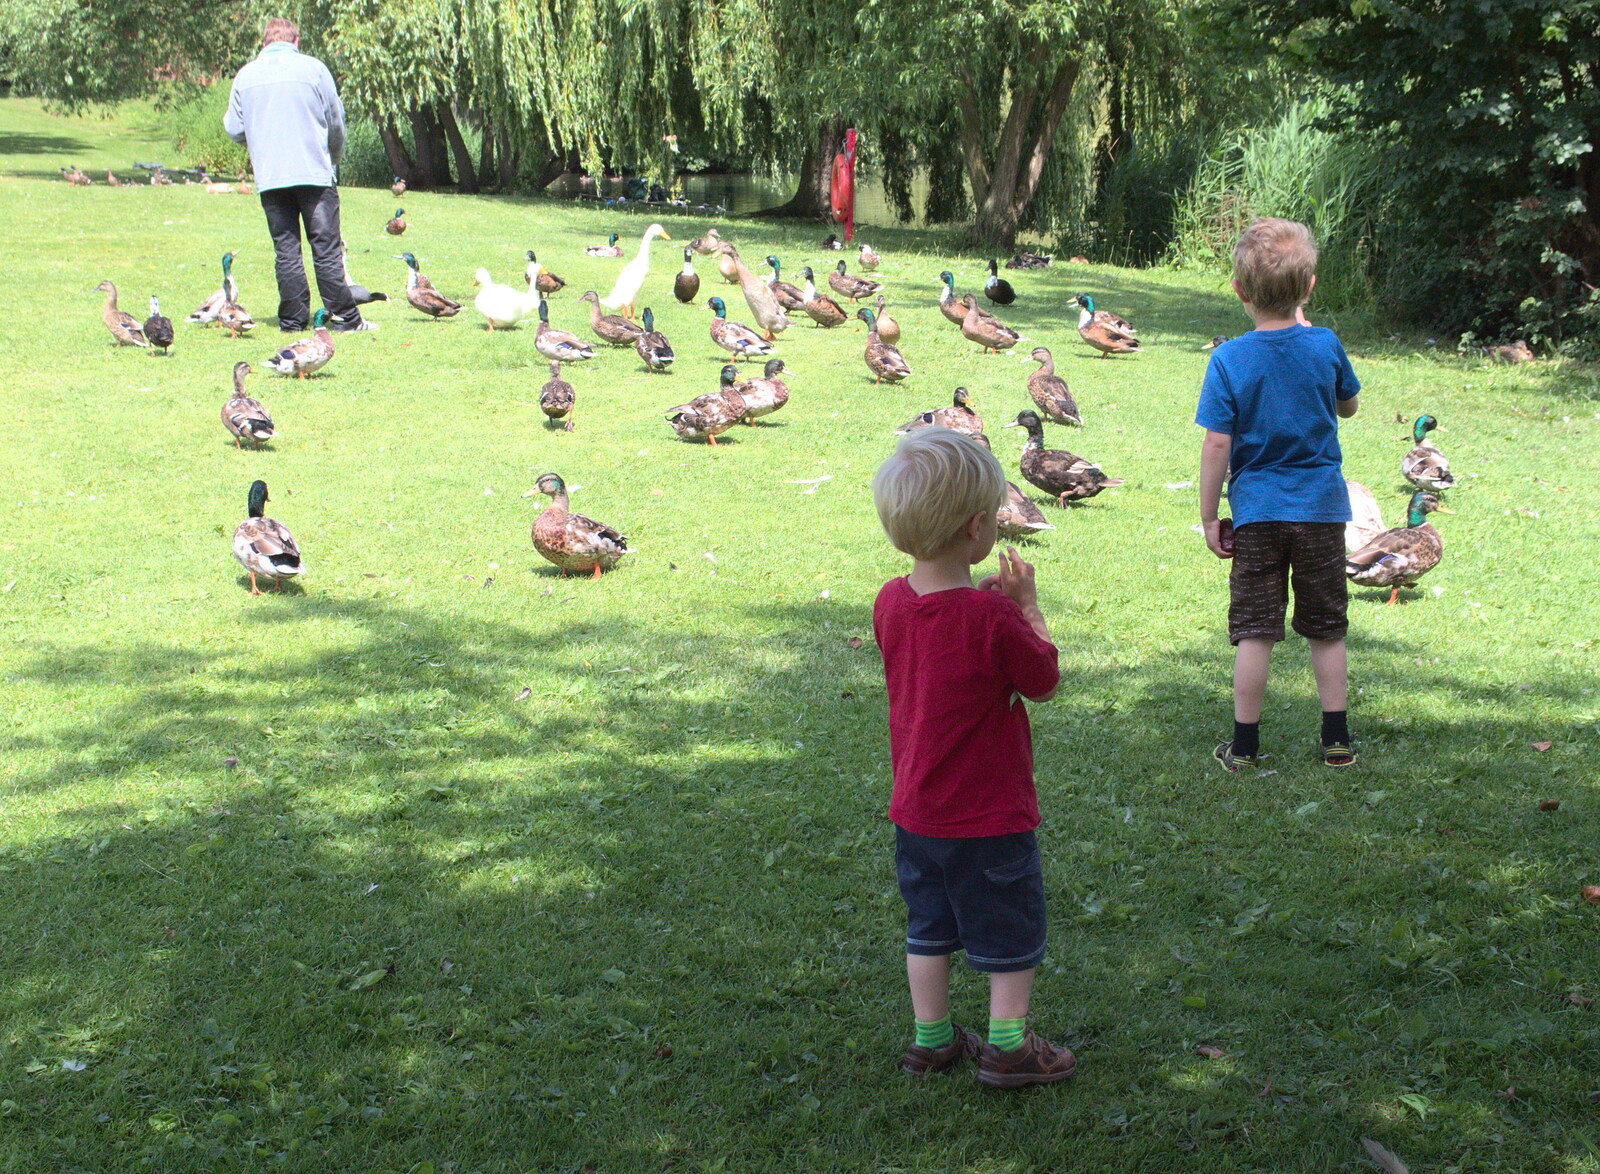 The boys follow ducks around from A Busy Day and a Church Fair, Diss, Norfolk - 28th June 2014